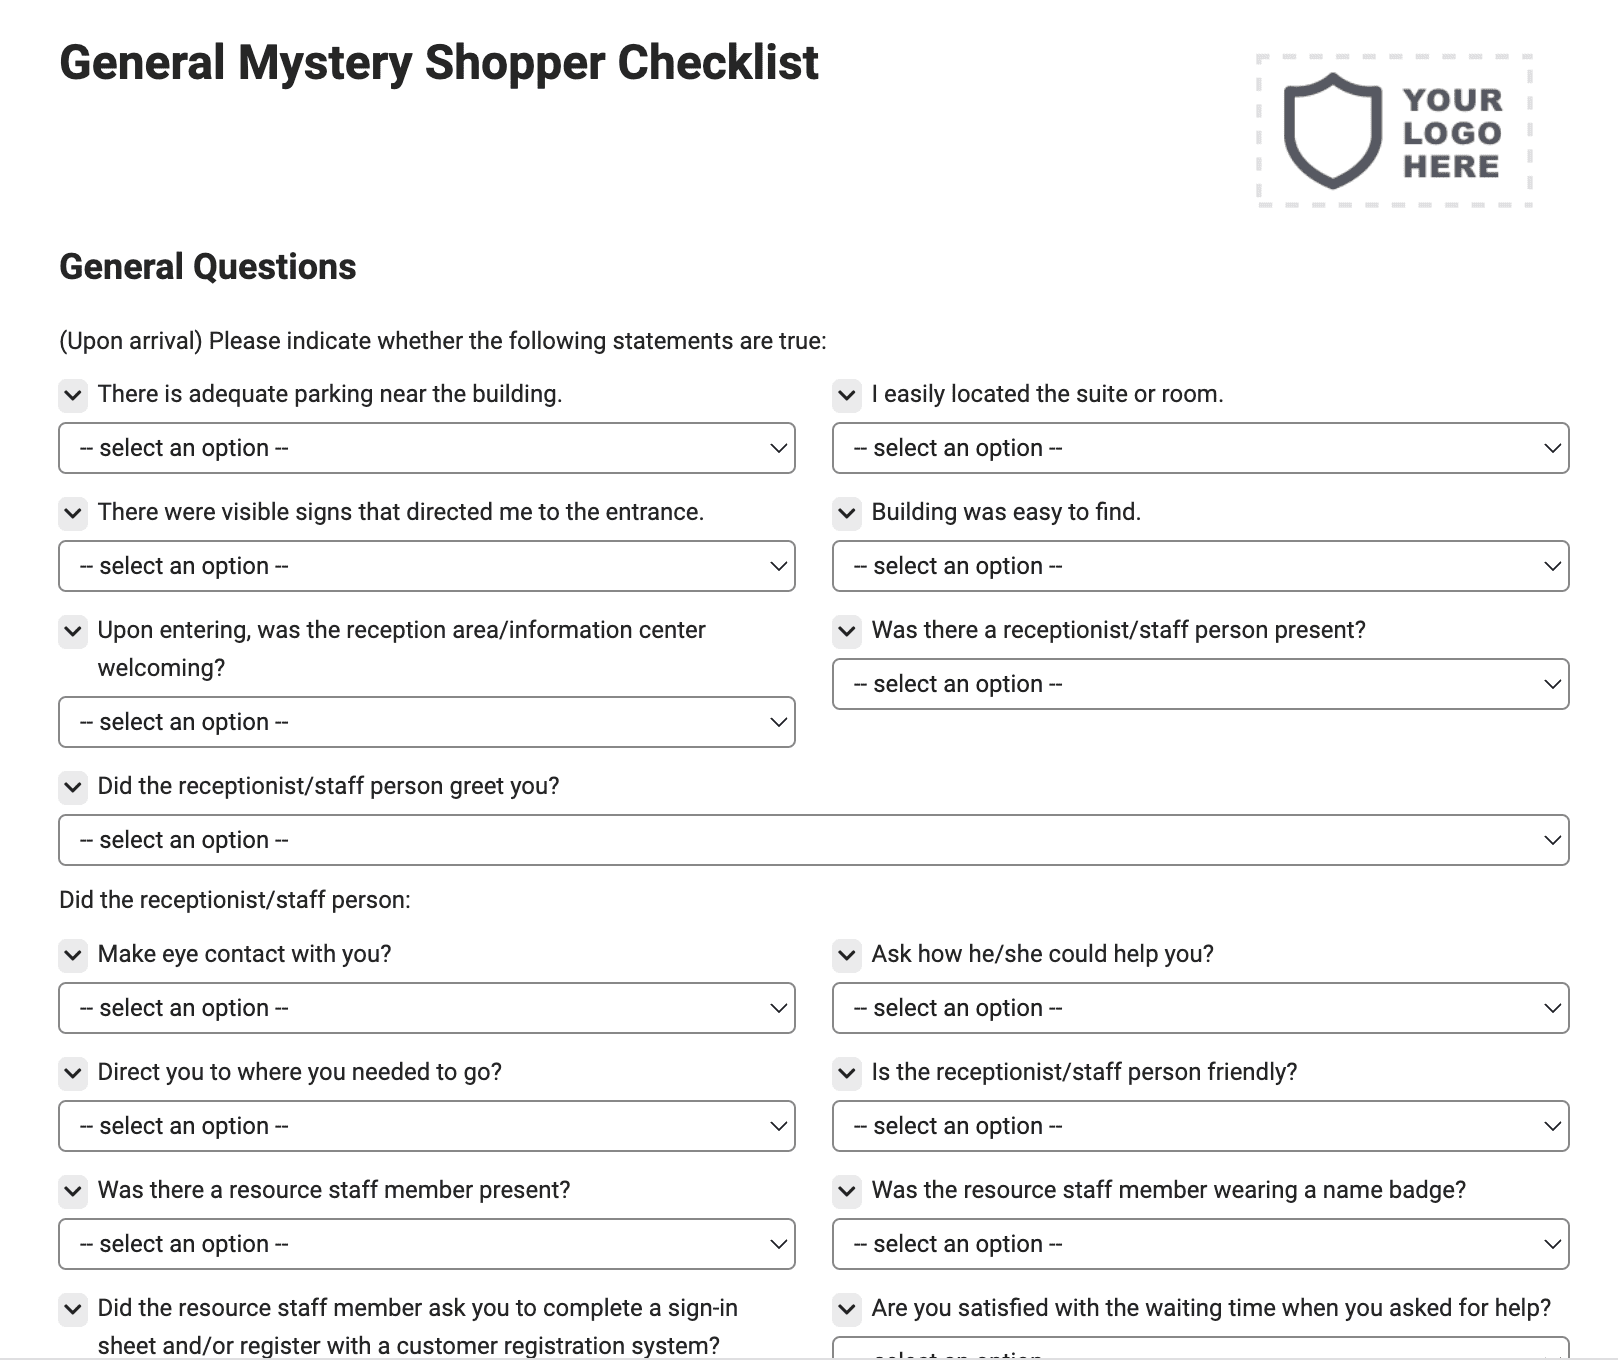 General Mystery Shopper Checklist